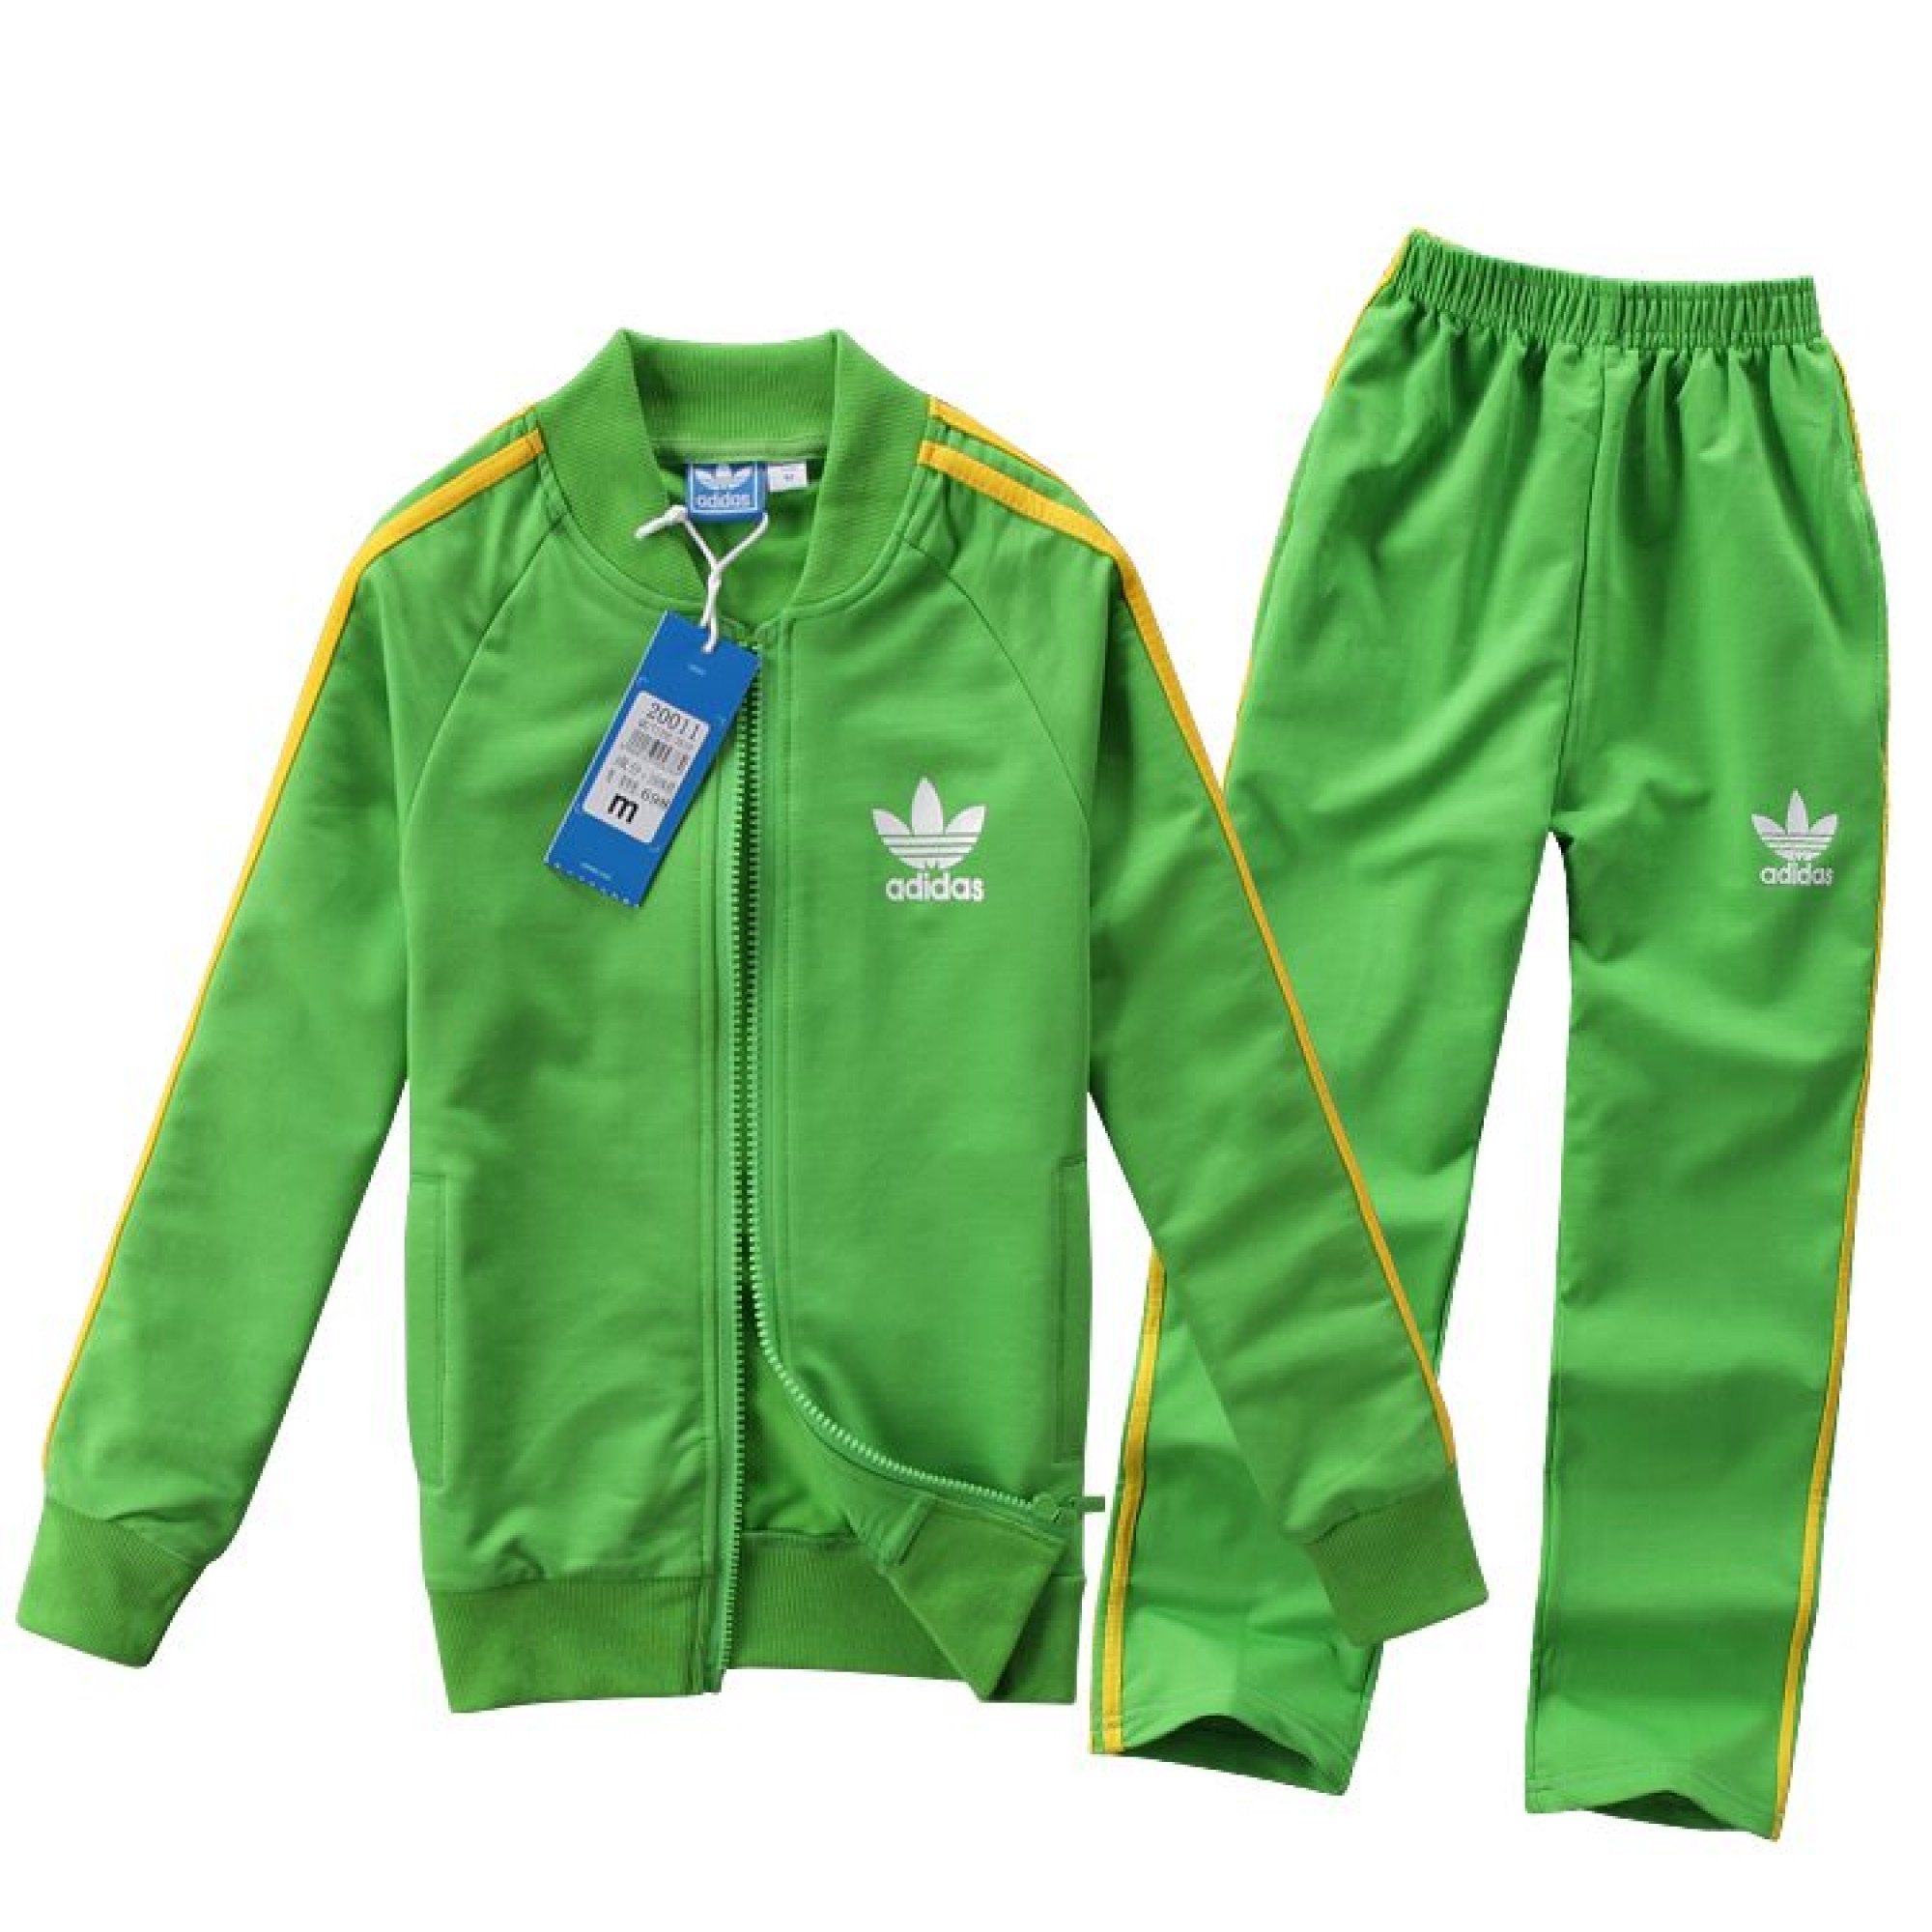 Адидас зеленый спортивный. Спортивные костюмы мужские адидас 2021. Спортивный костюм adidas (a433). Костюм адидас 2021. Спортивный костюм адидас арт 7893-404.